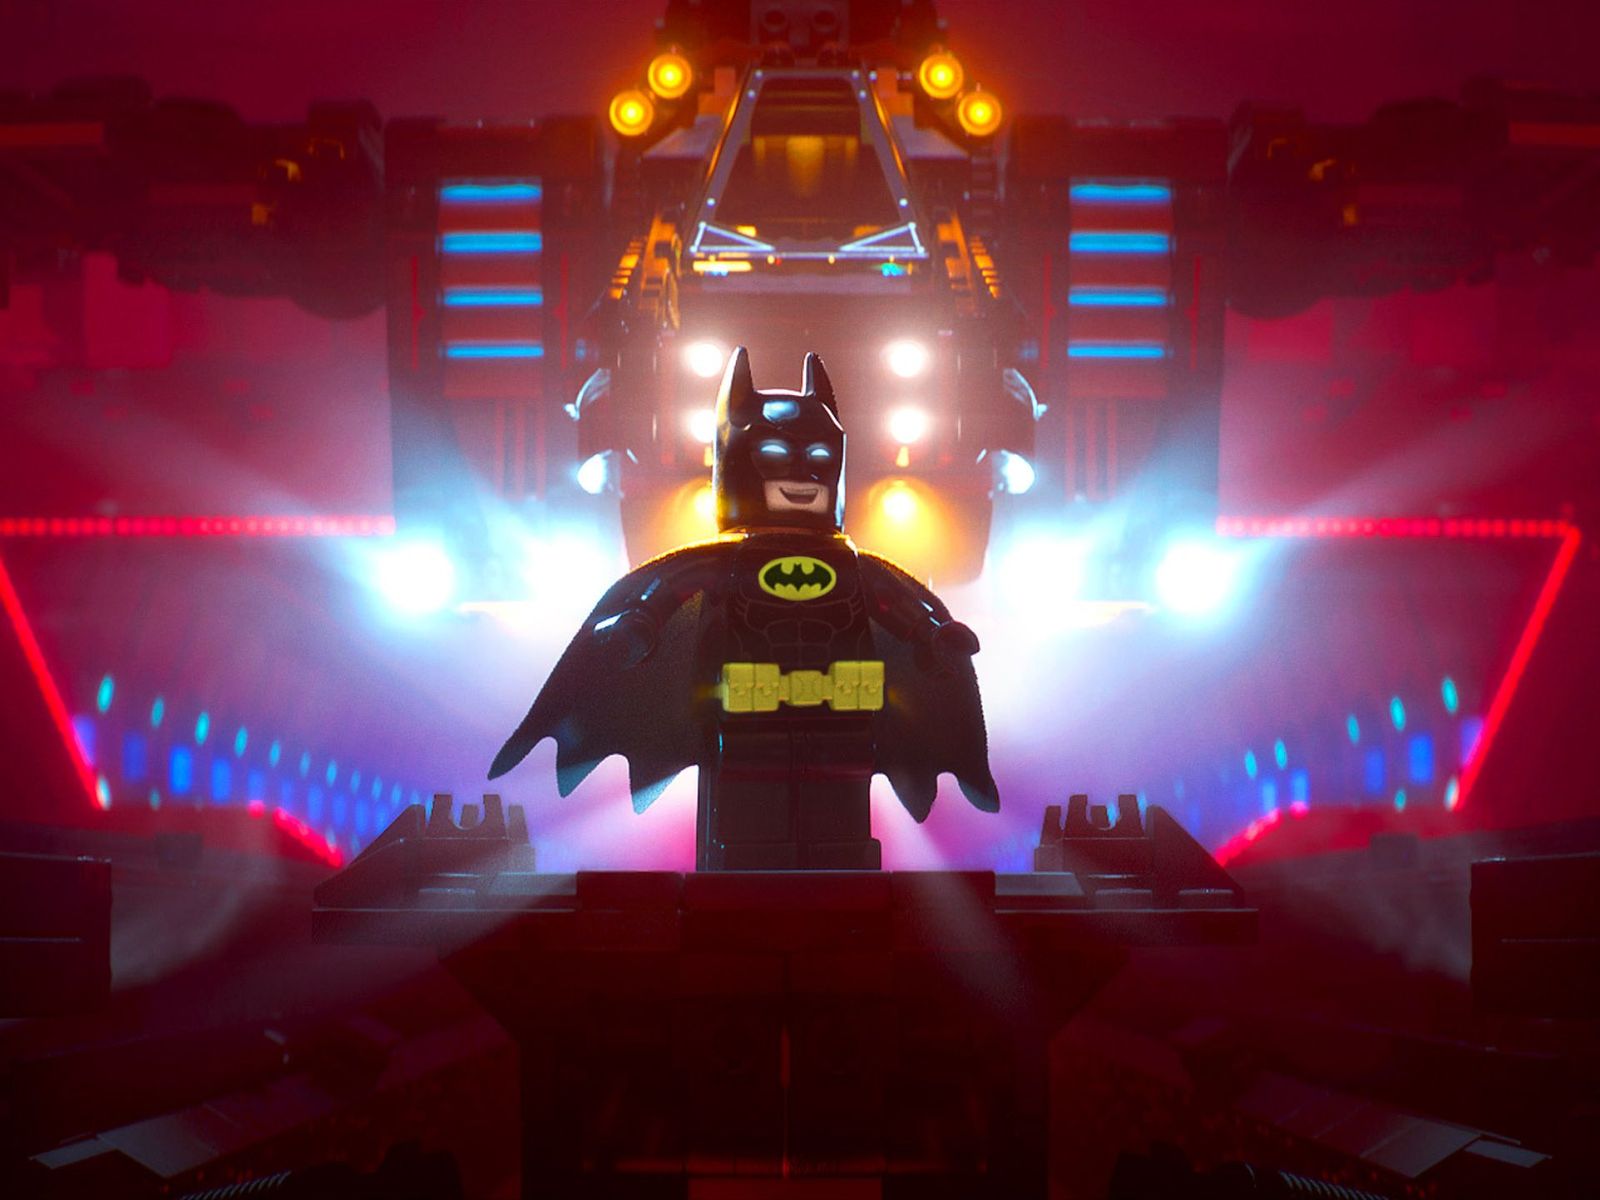 LEGO Batman Movie Images Revealed Ahead Of Trailer